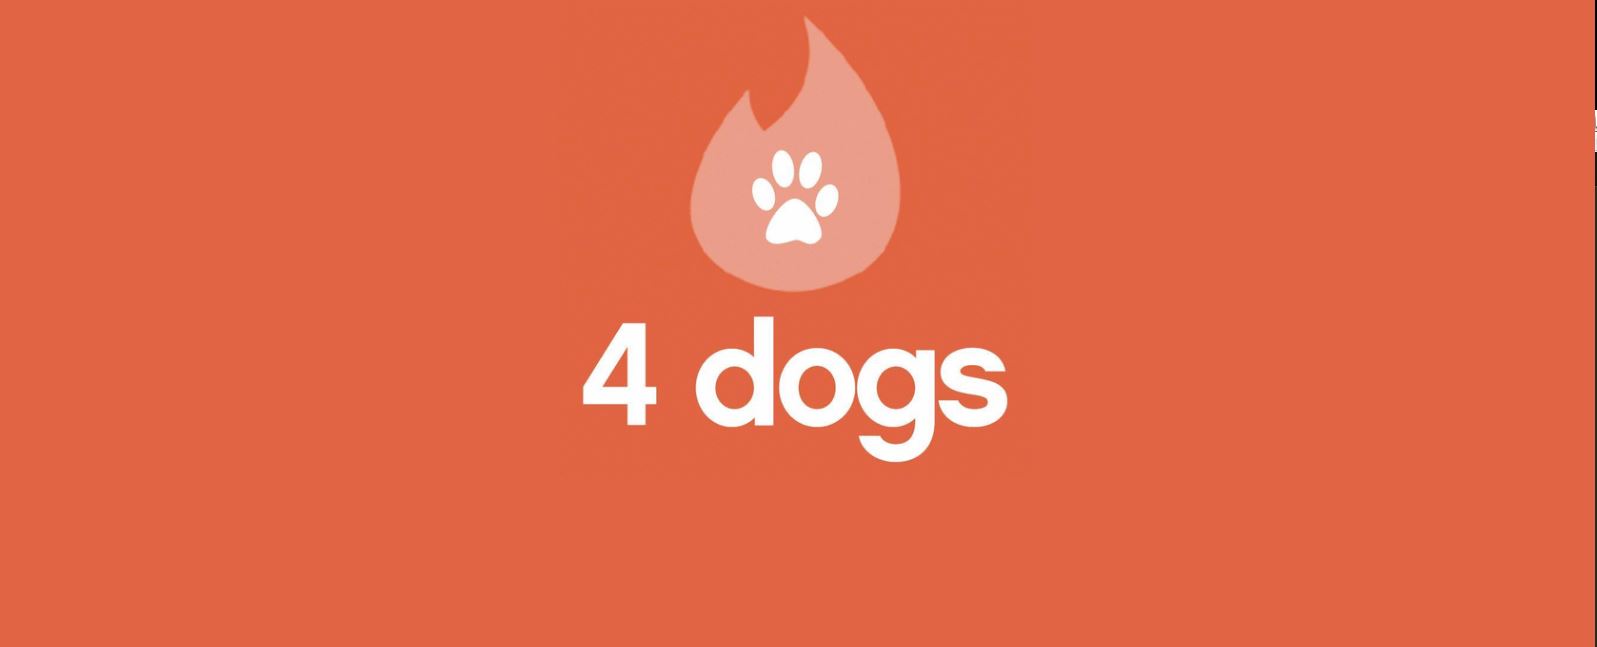 Tinder 4 dogs logo